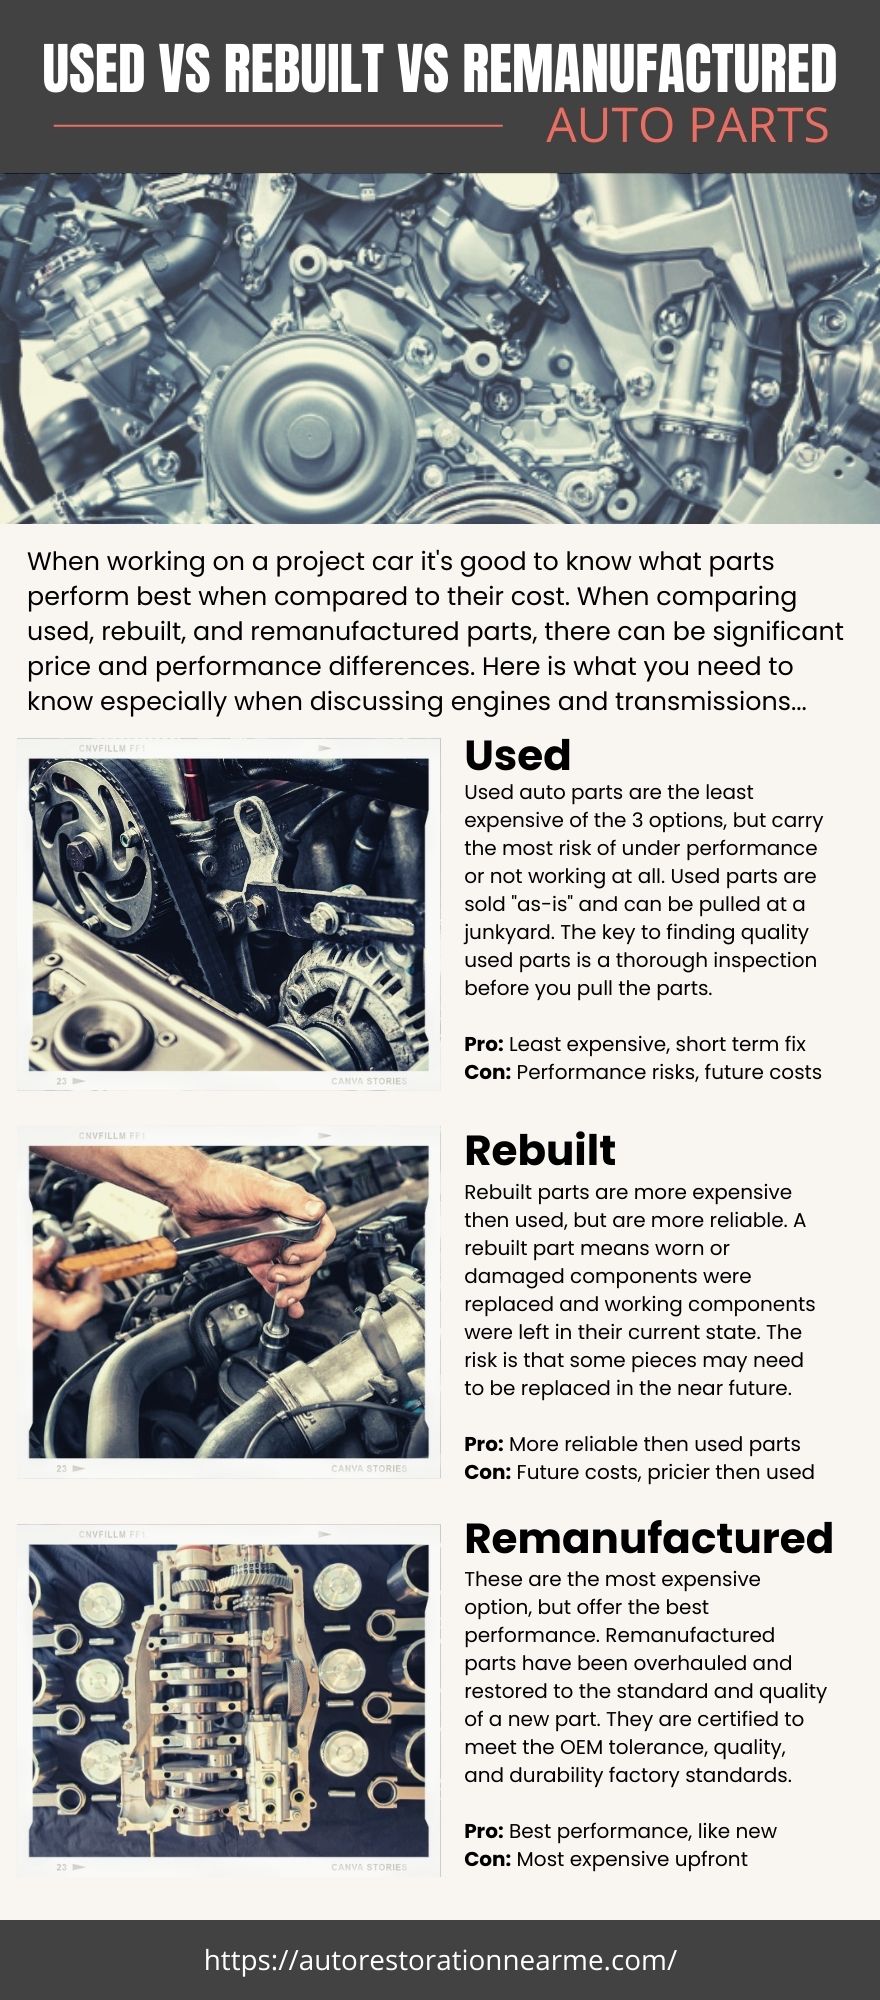 Auto Parts Used vs Rebuilt vs Remanufactured